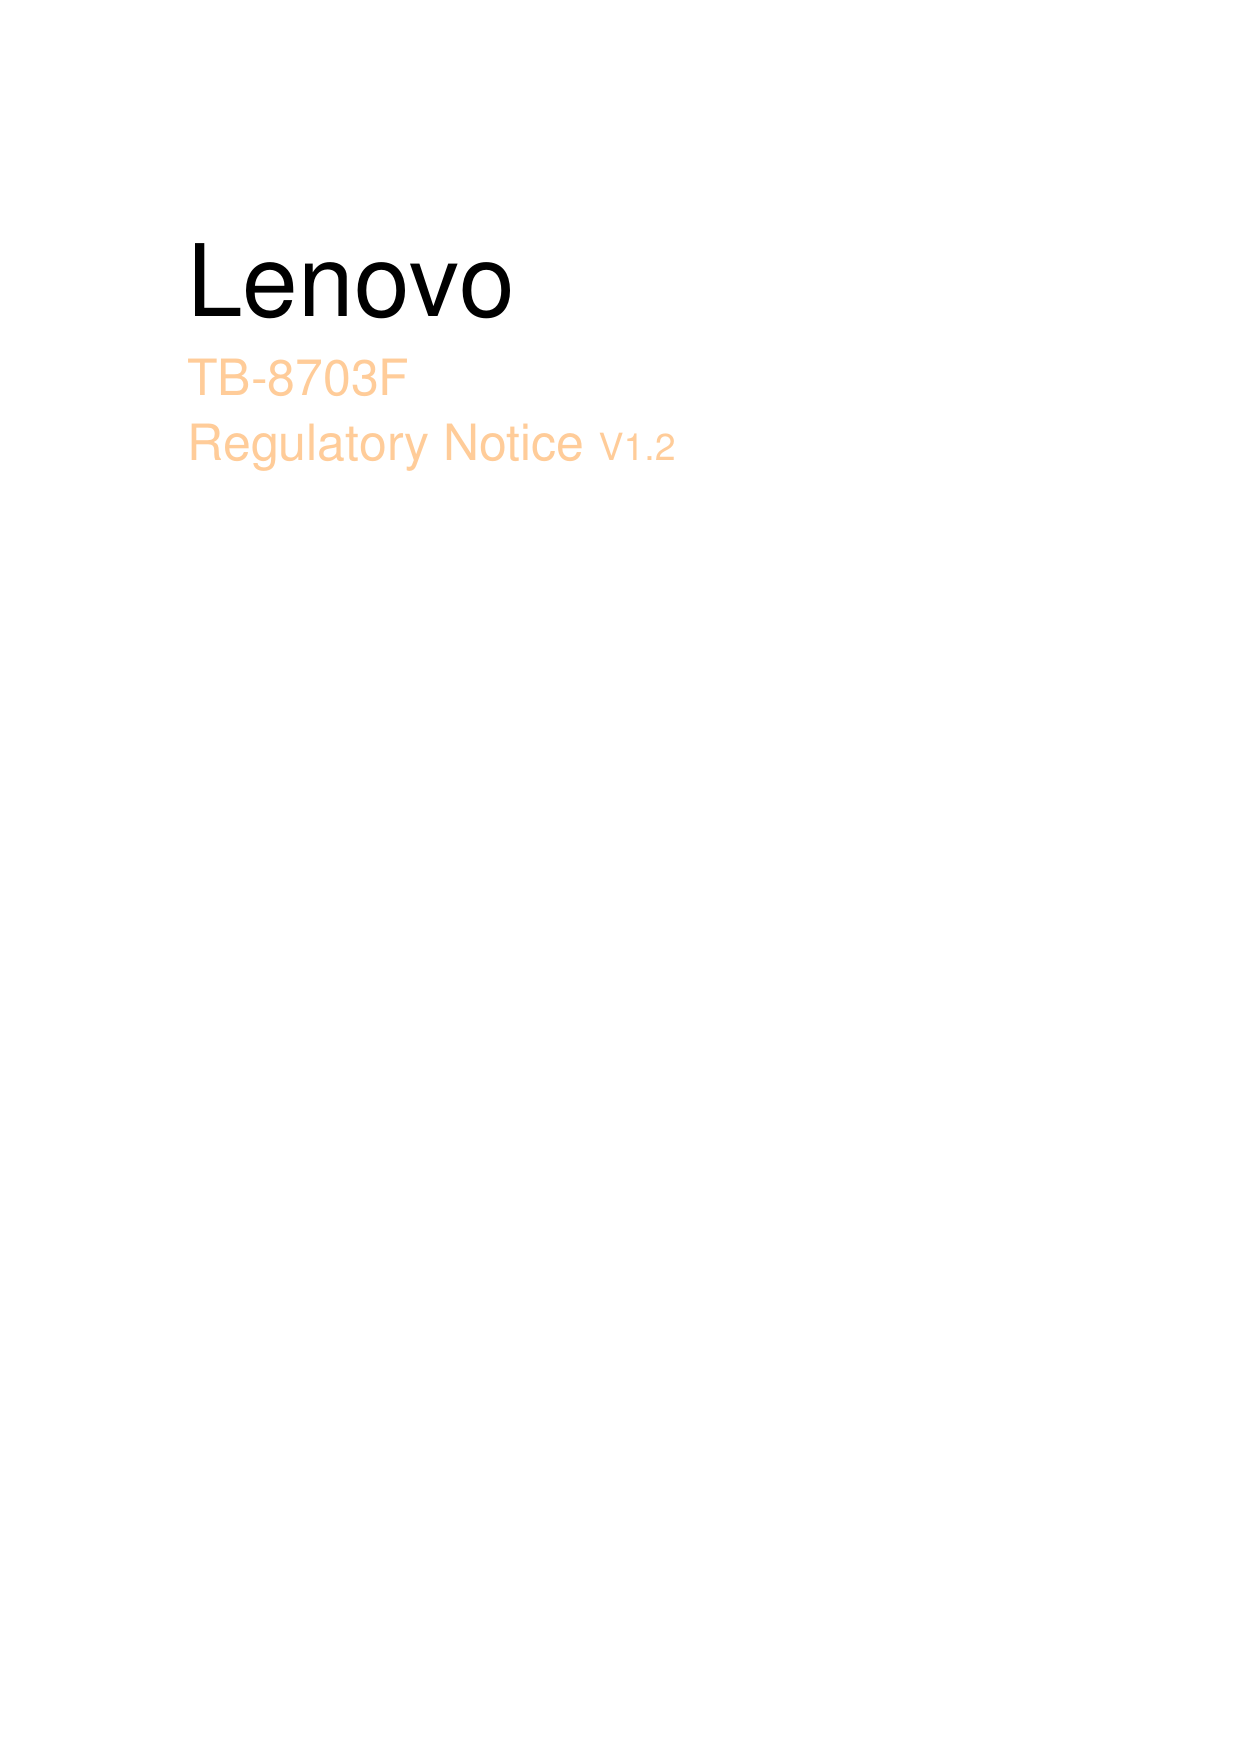   Lenovo TB-8703F Regulatory Notice V1.2                                   